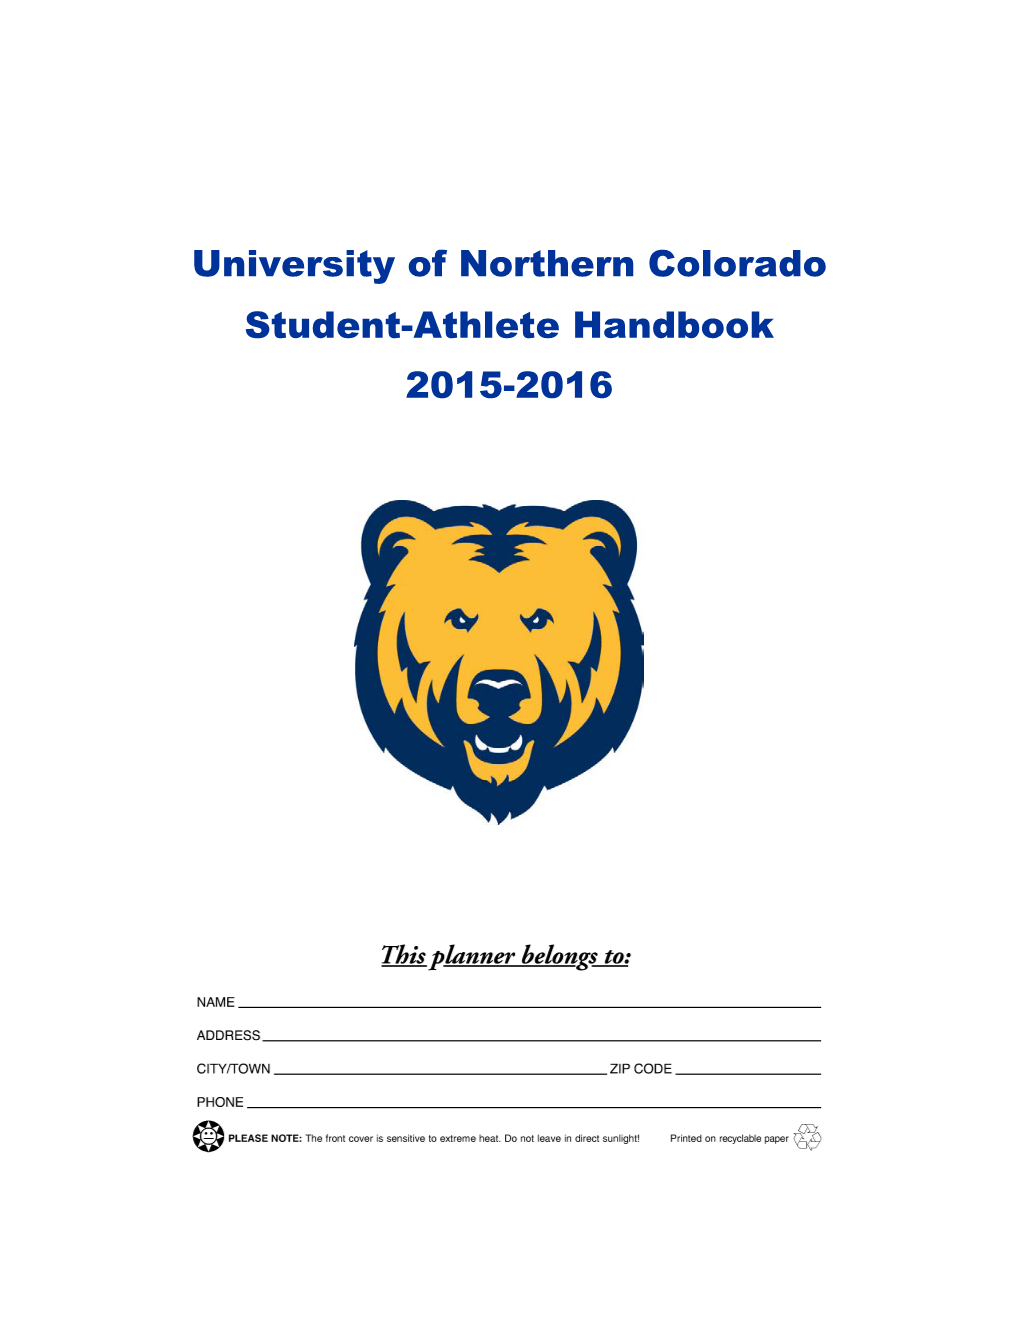 University of Northern Colorado Student-Athlete Handbook 2015